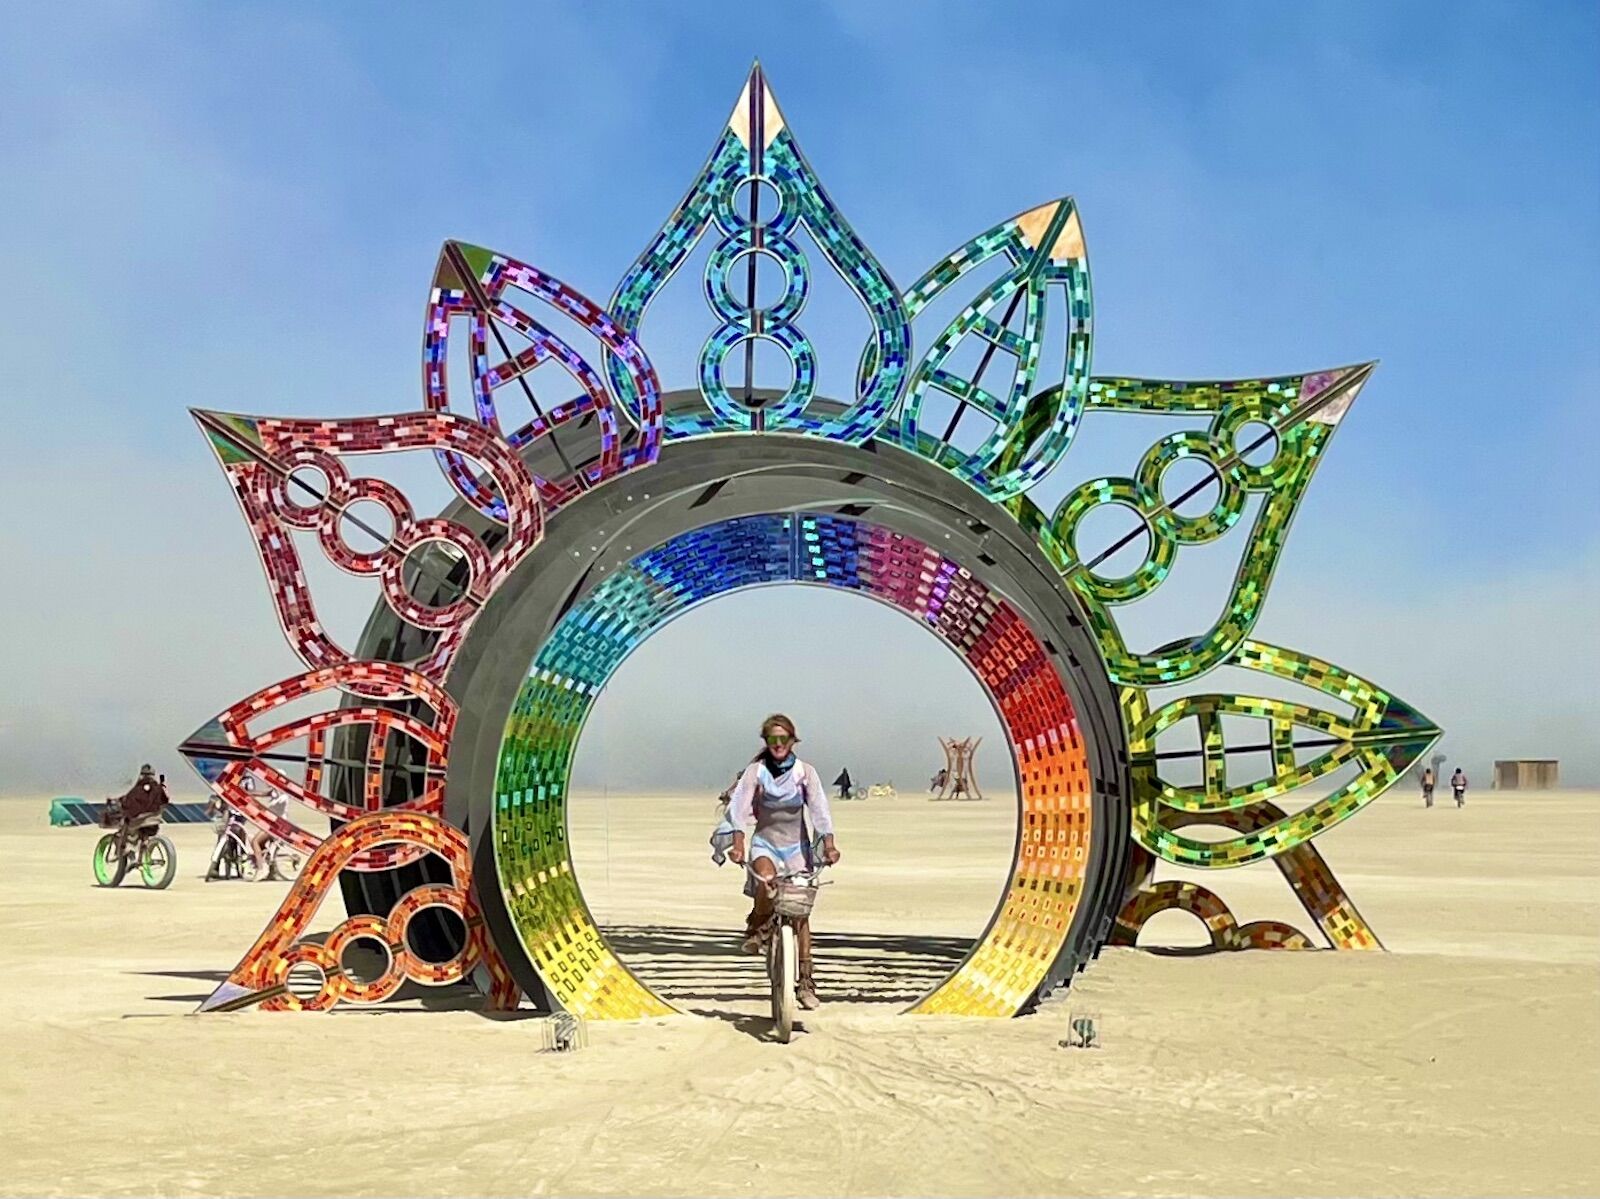 Art from Burning man 2022: Petaled Portal by David Oliver